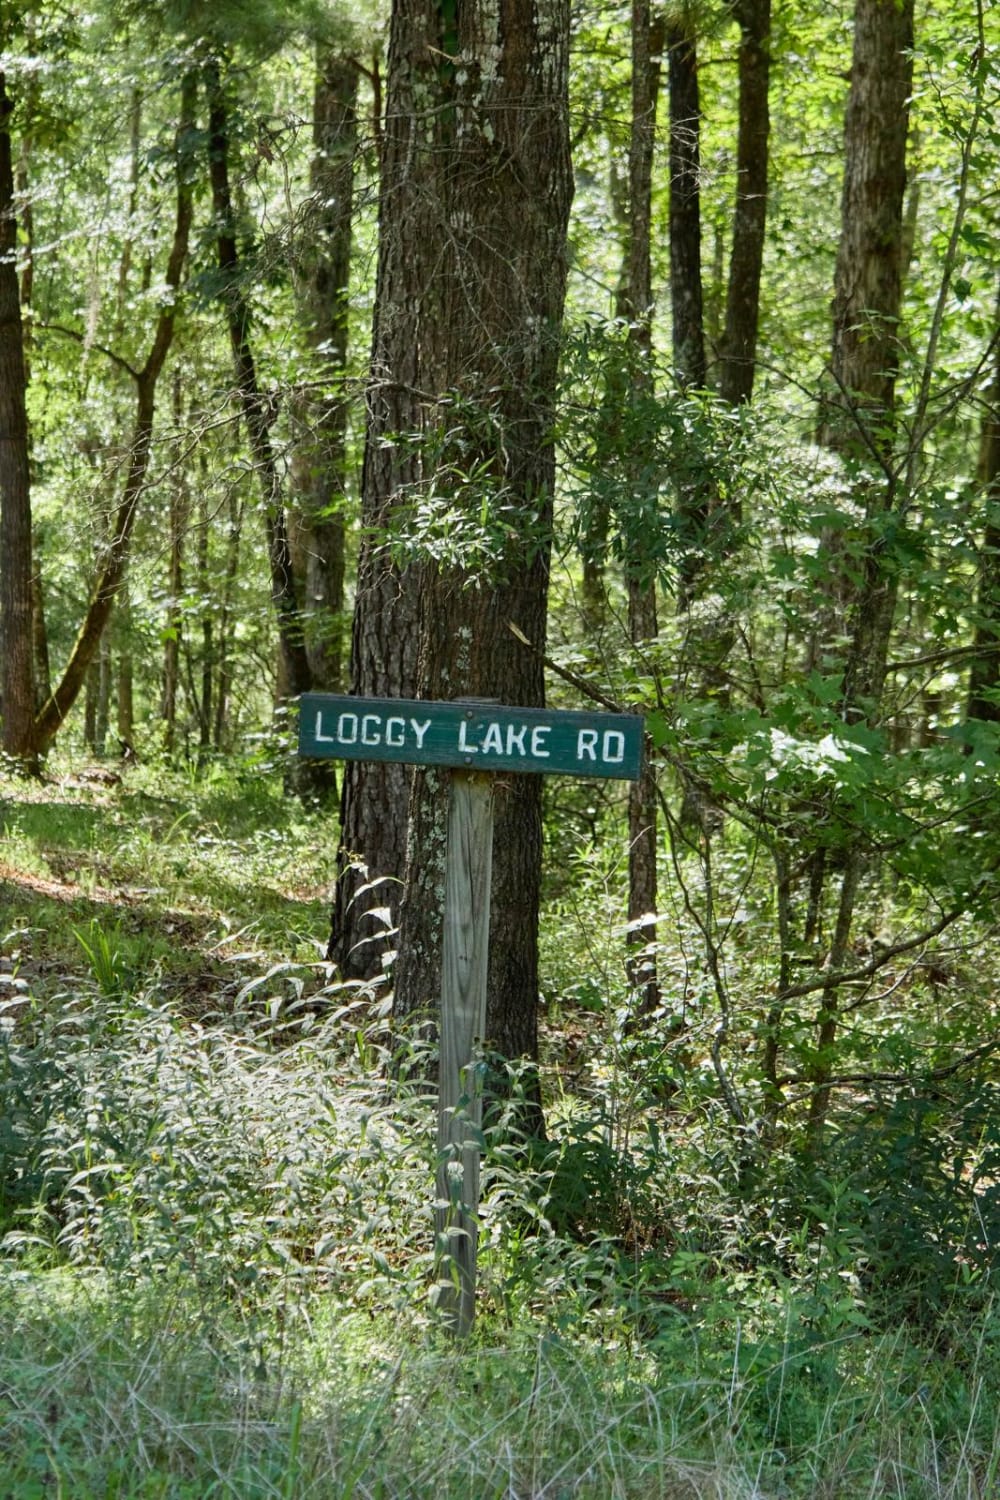 Loggy Lake Road